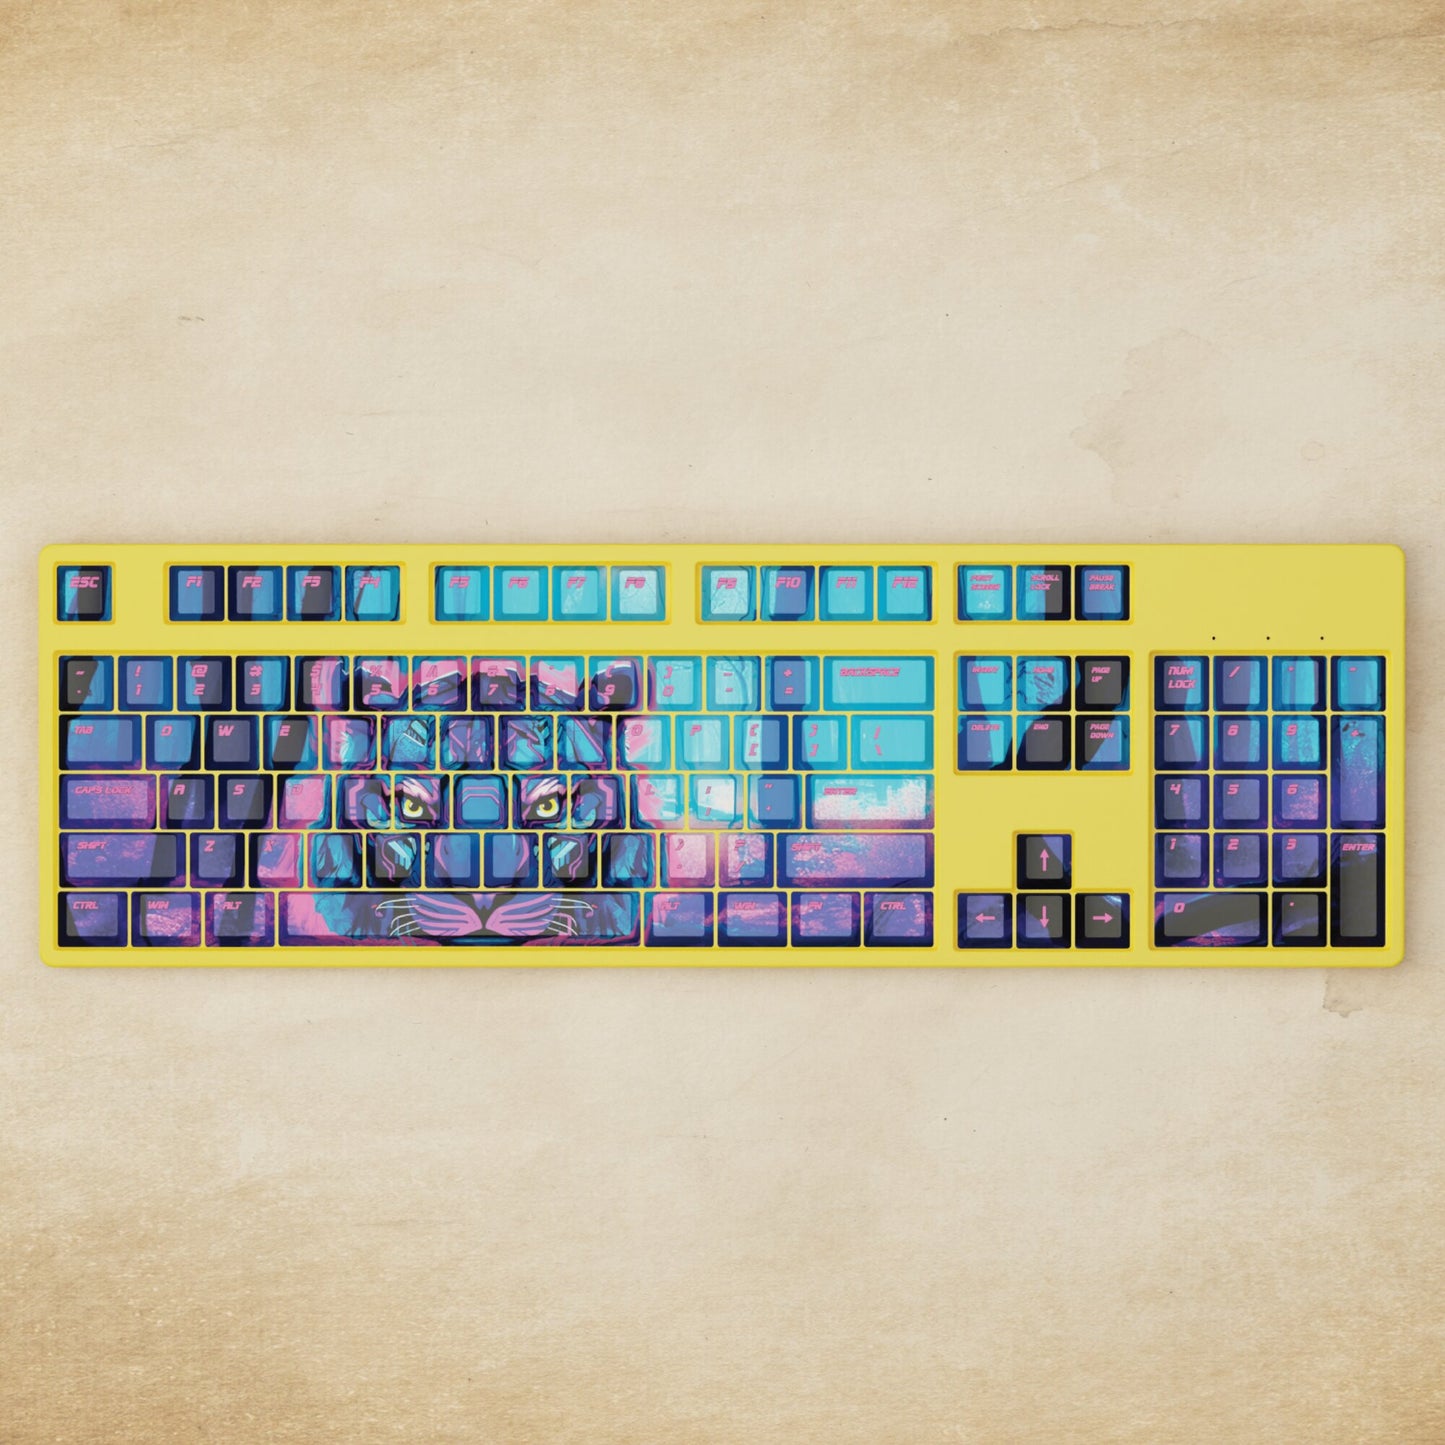 Alpha 108 - 100% Cyber Tiger Mechanical Keyboard